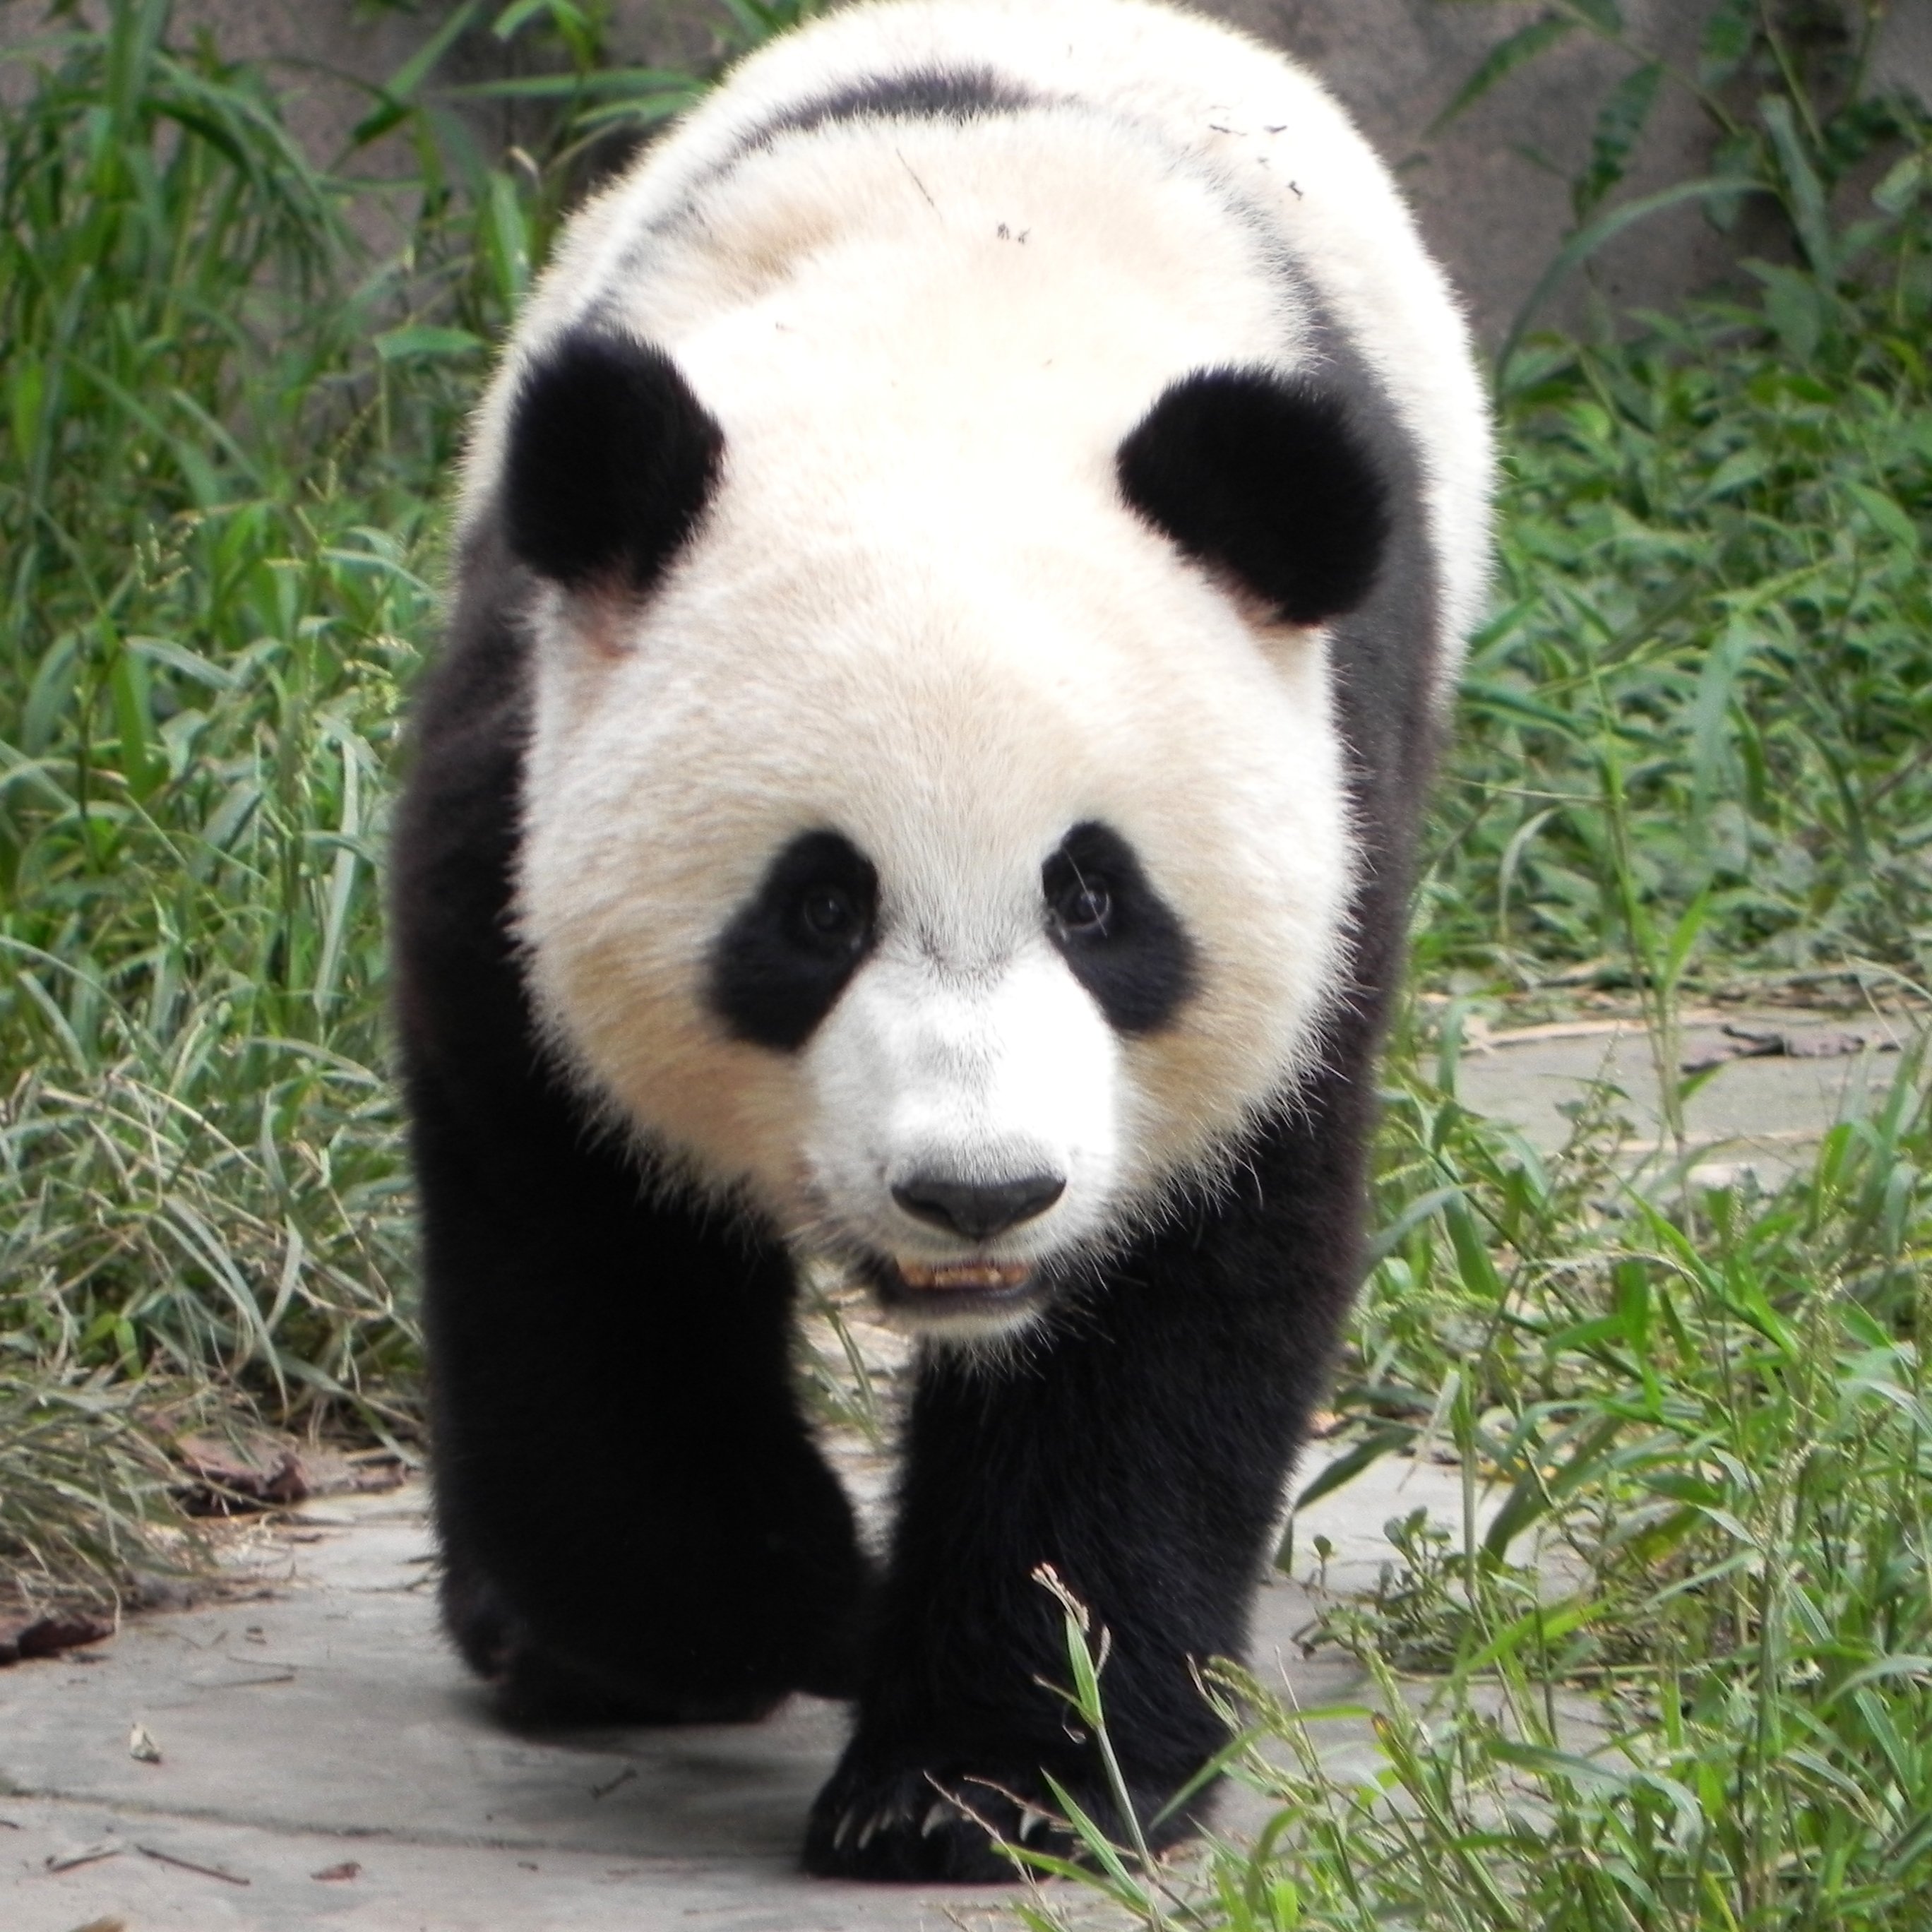 Giant pandas videos